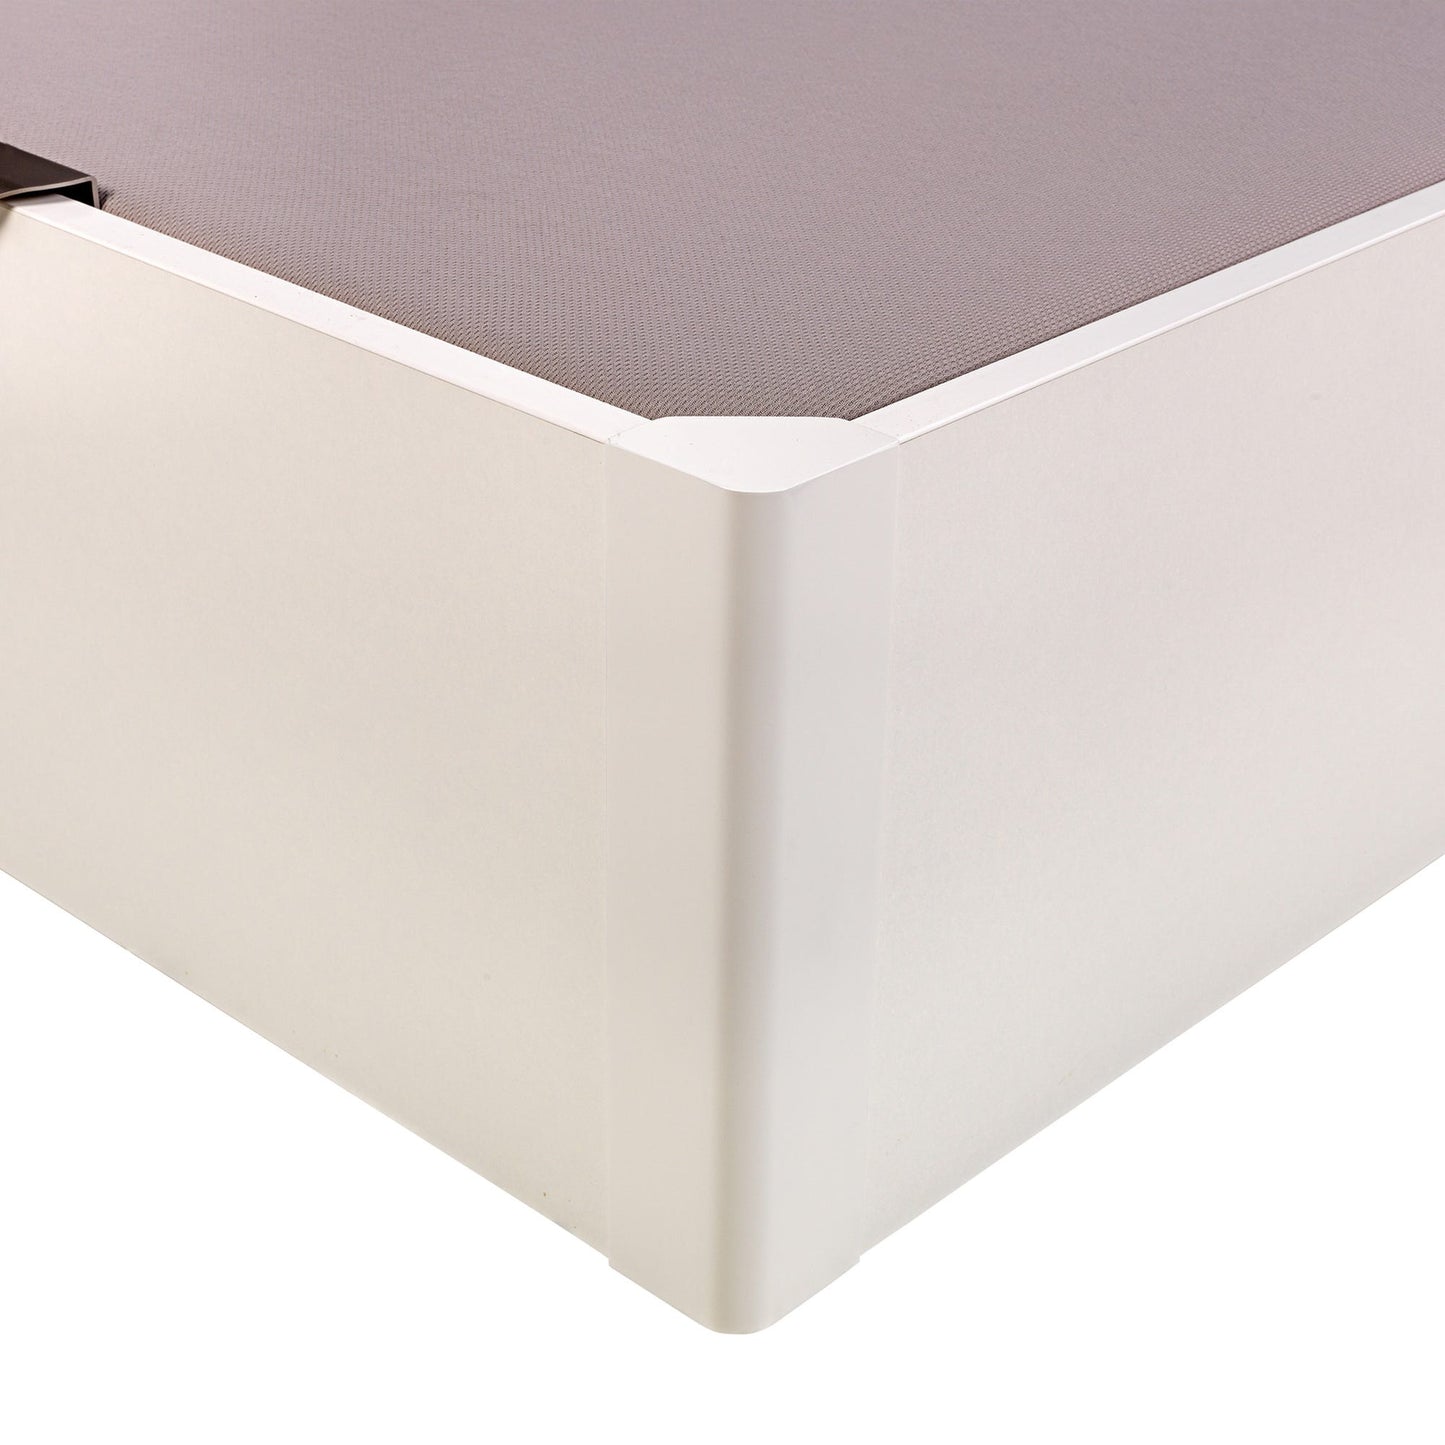 Canapé abatible de madera juvenil de color blanco - DESIGN JUV - 105x190